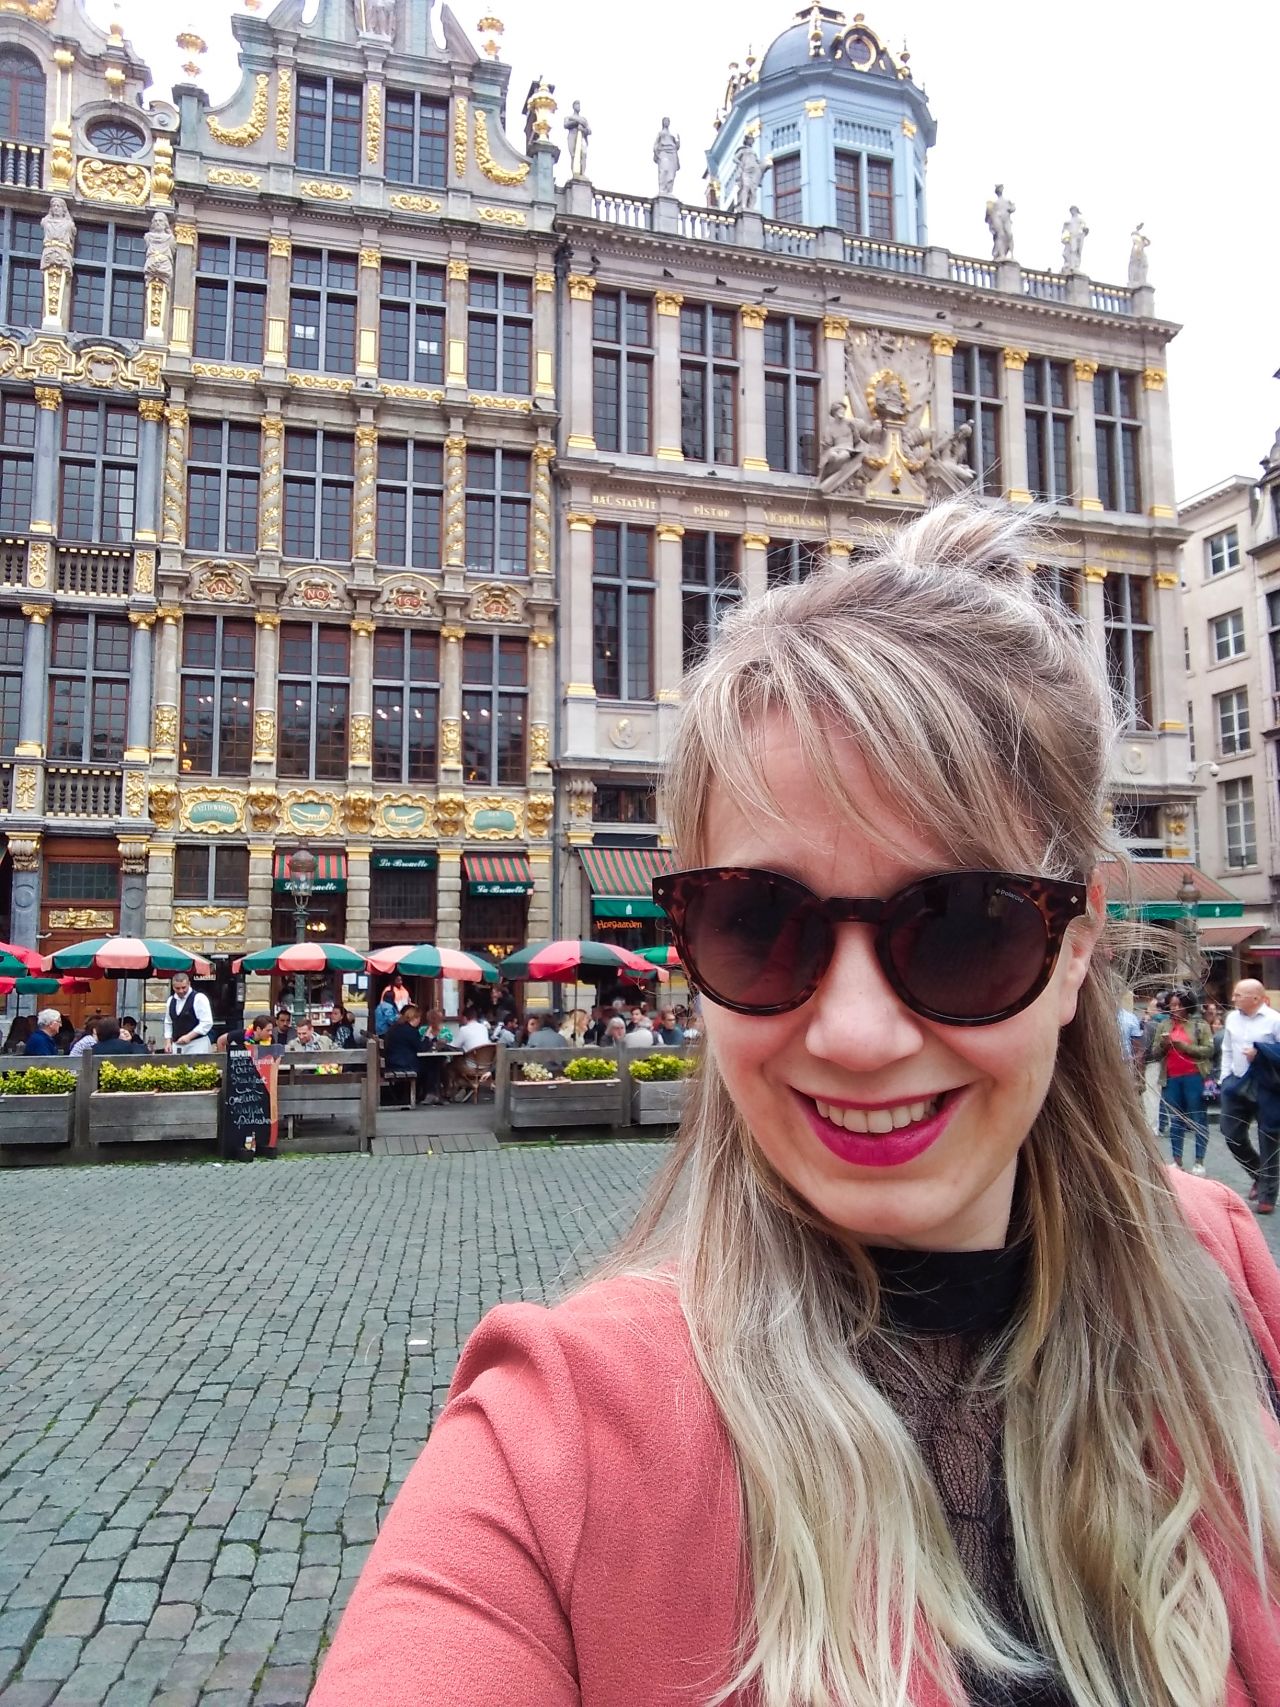 Brussel Grote Markt1